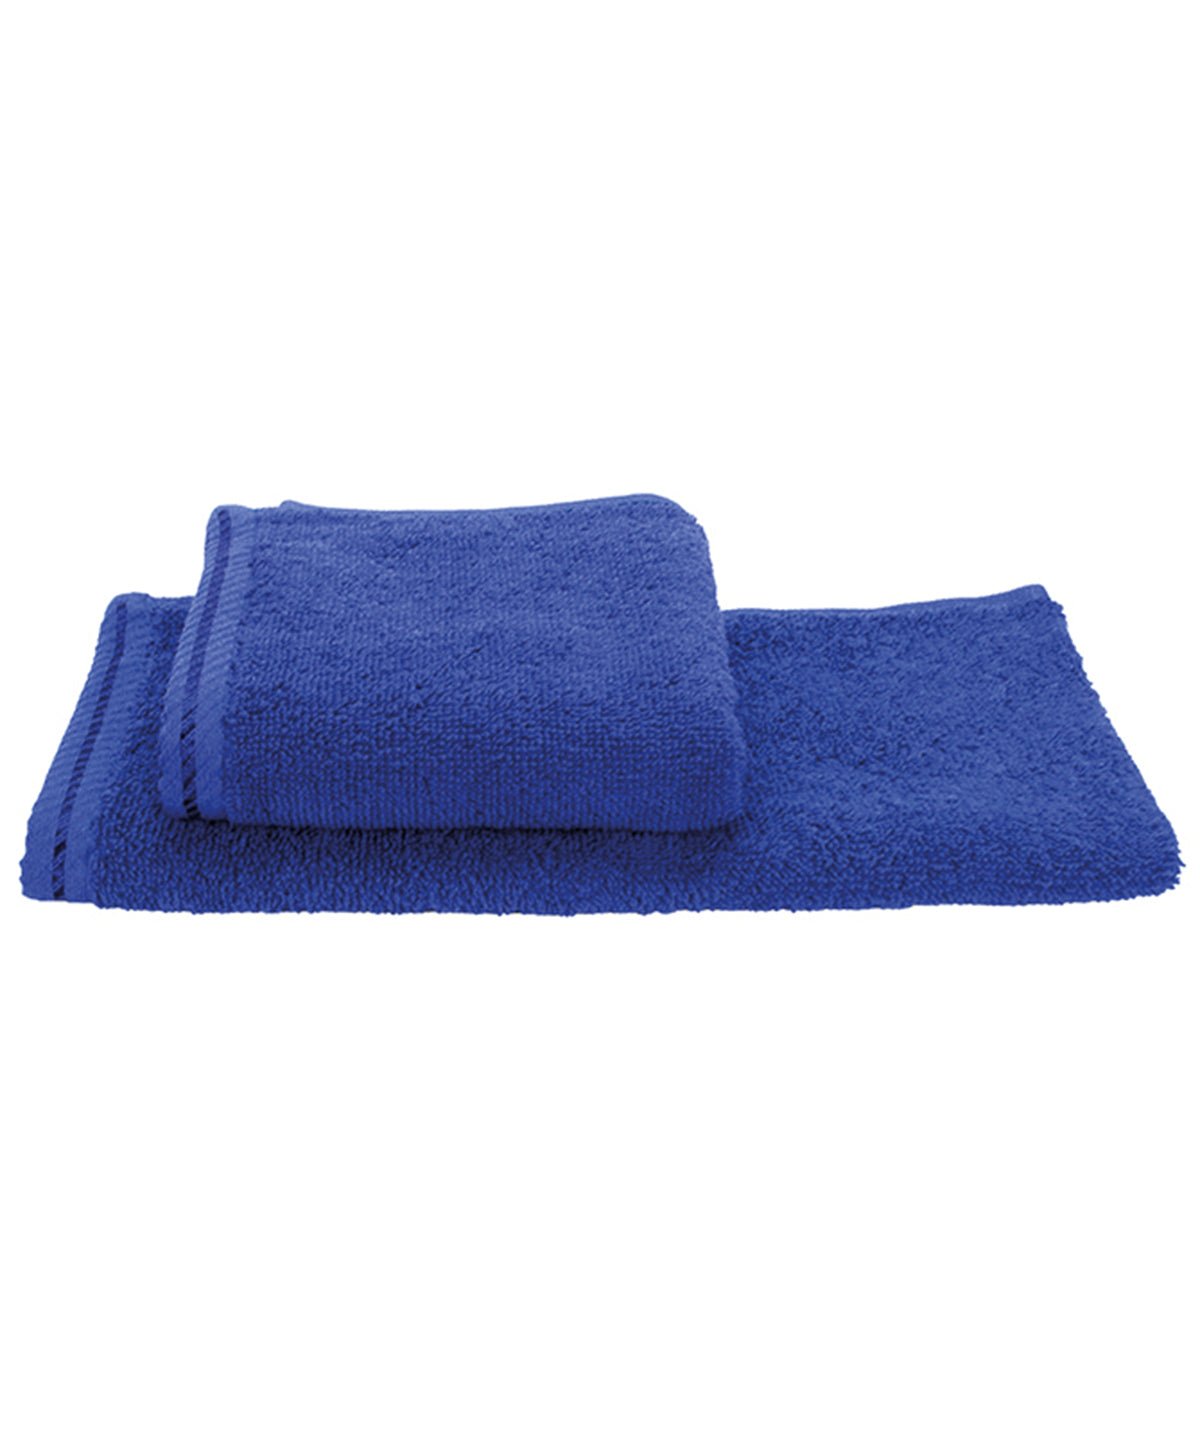 Personalised Towels - Mid Blue A&R Towels ARTG® Guest towel